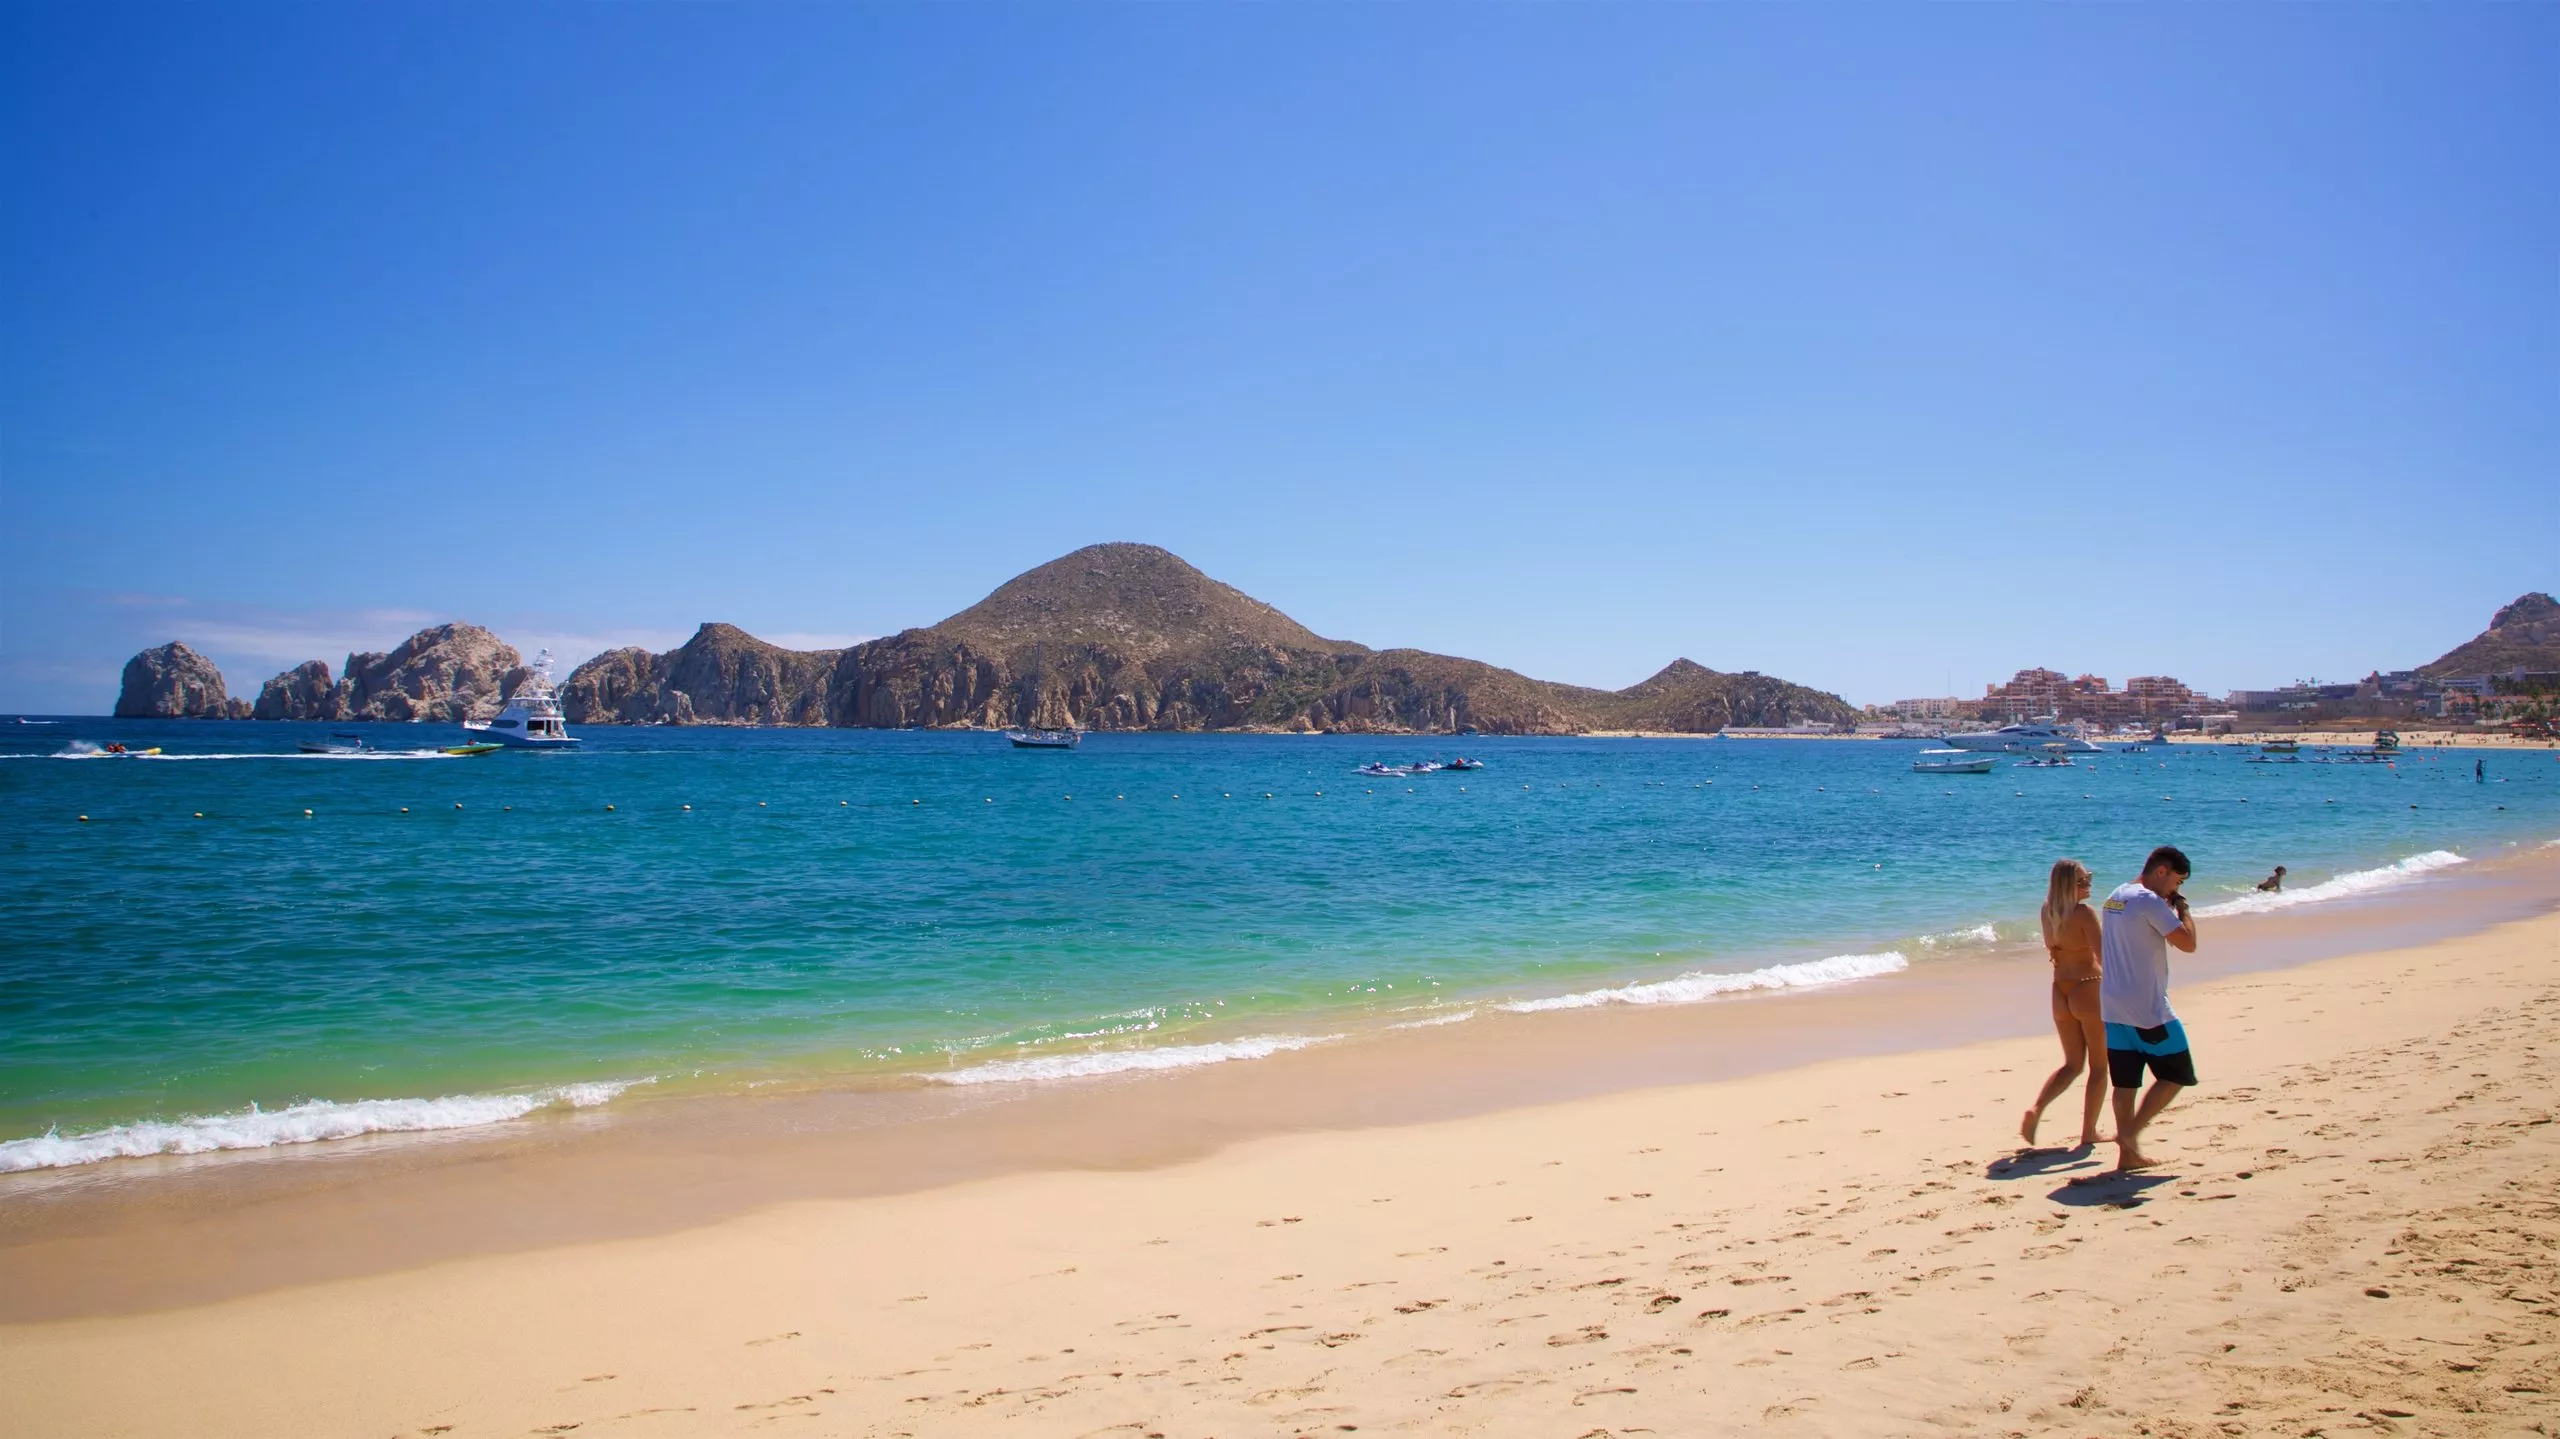 El Medano Beach in Mexico, North America | Beaches - Rated 3.7